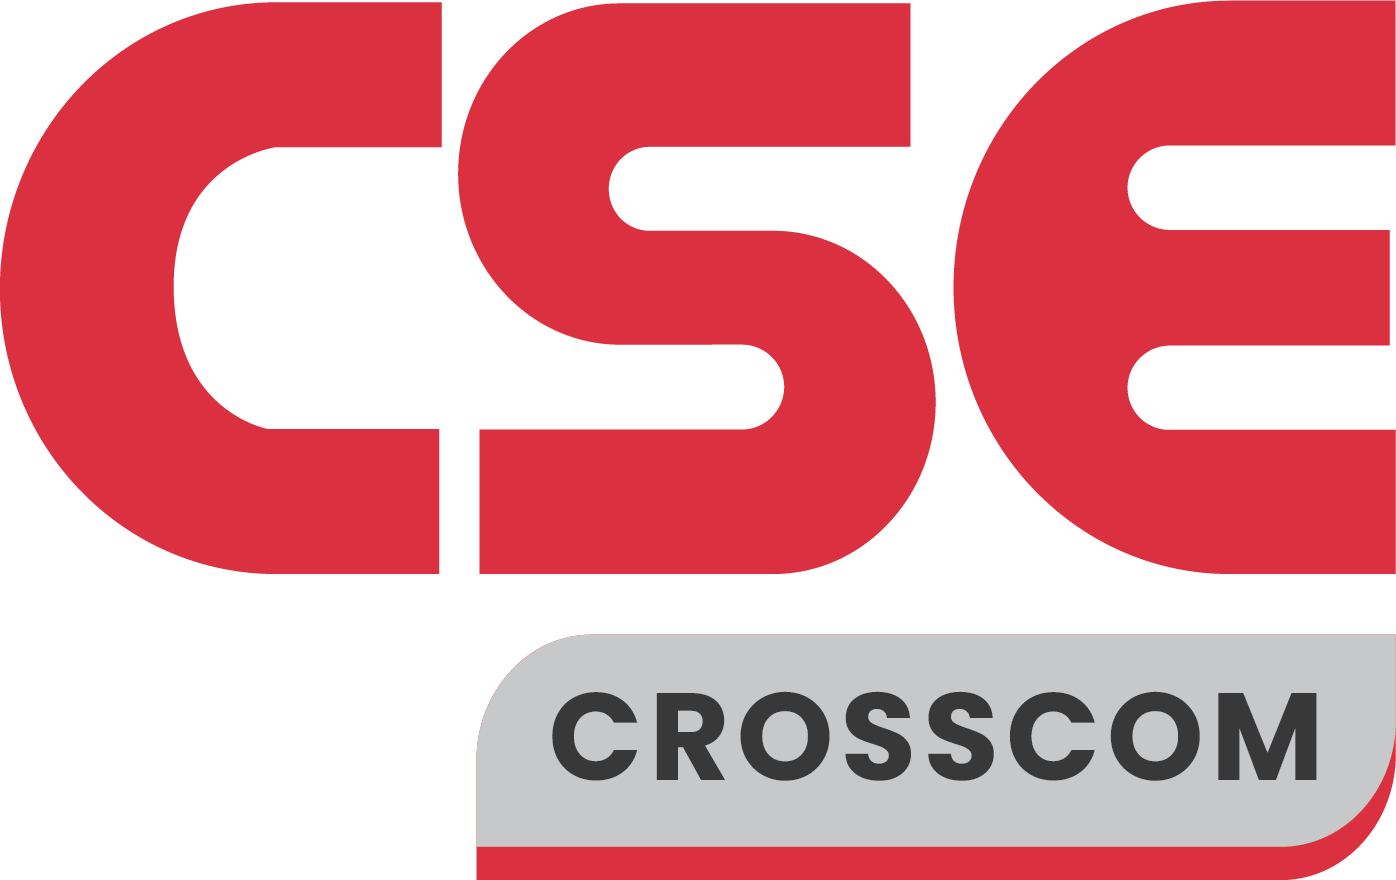 CSE Crosscom